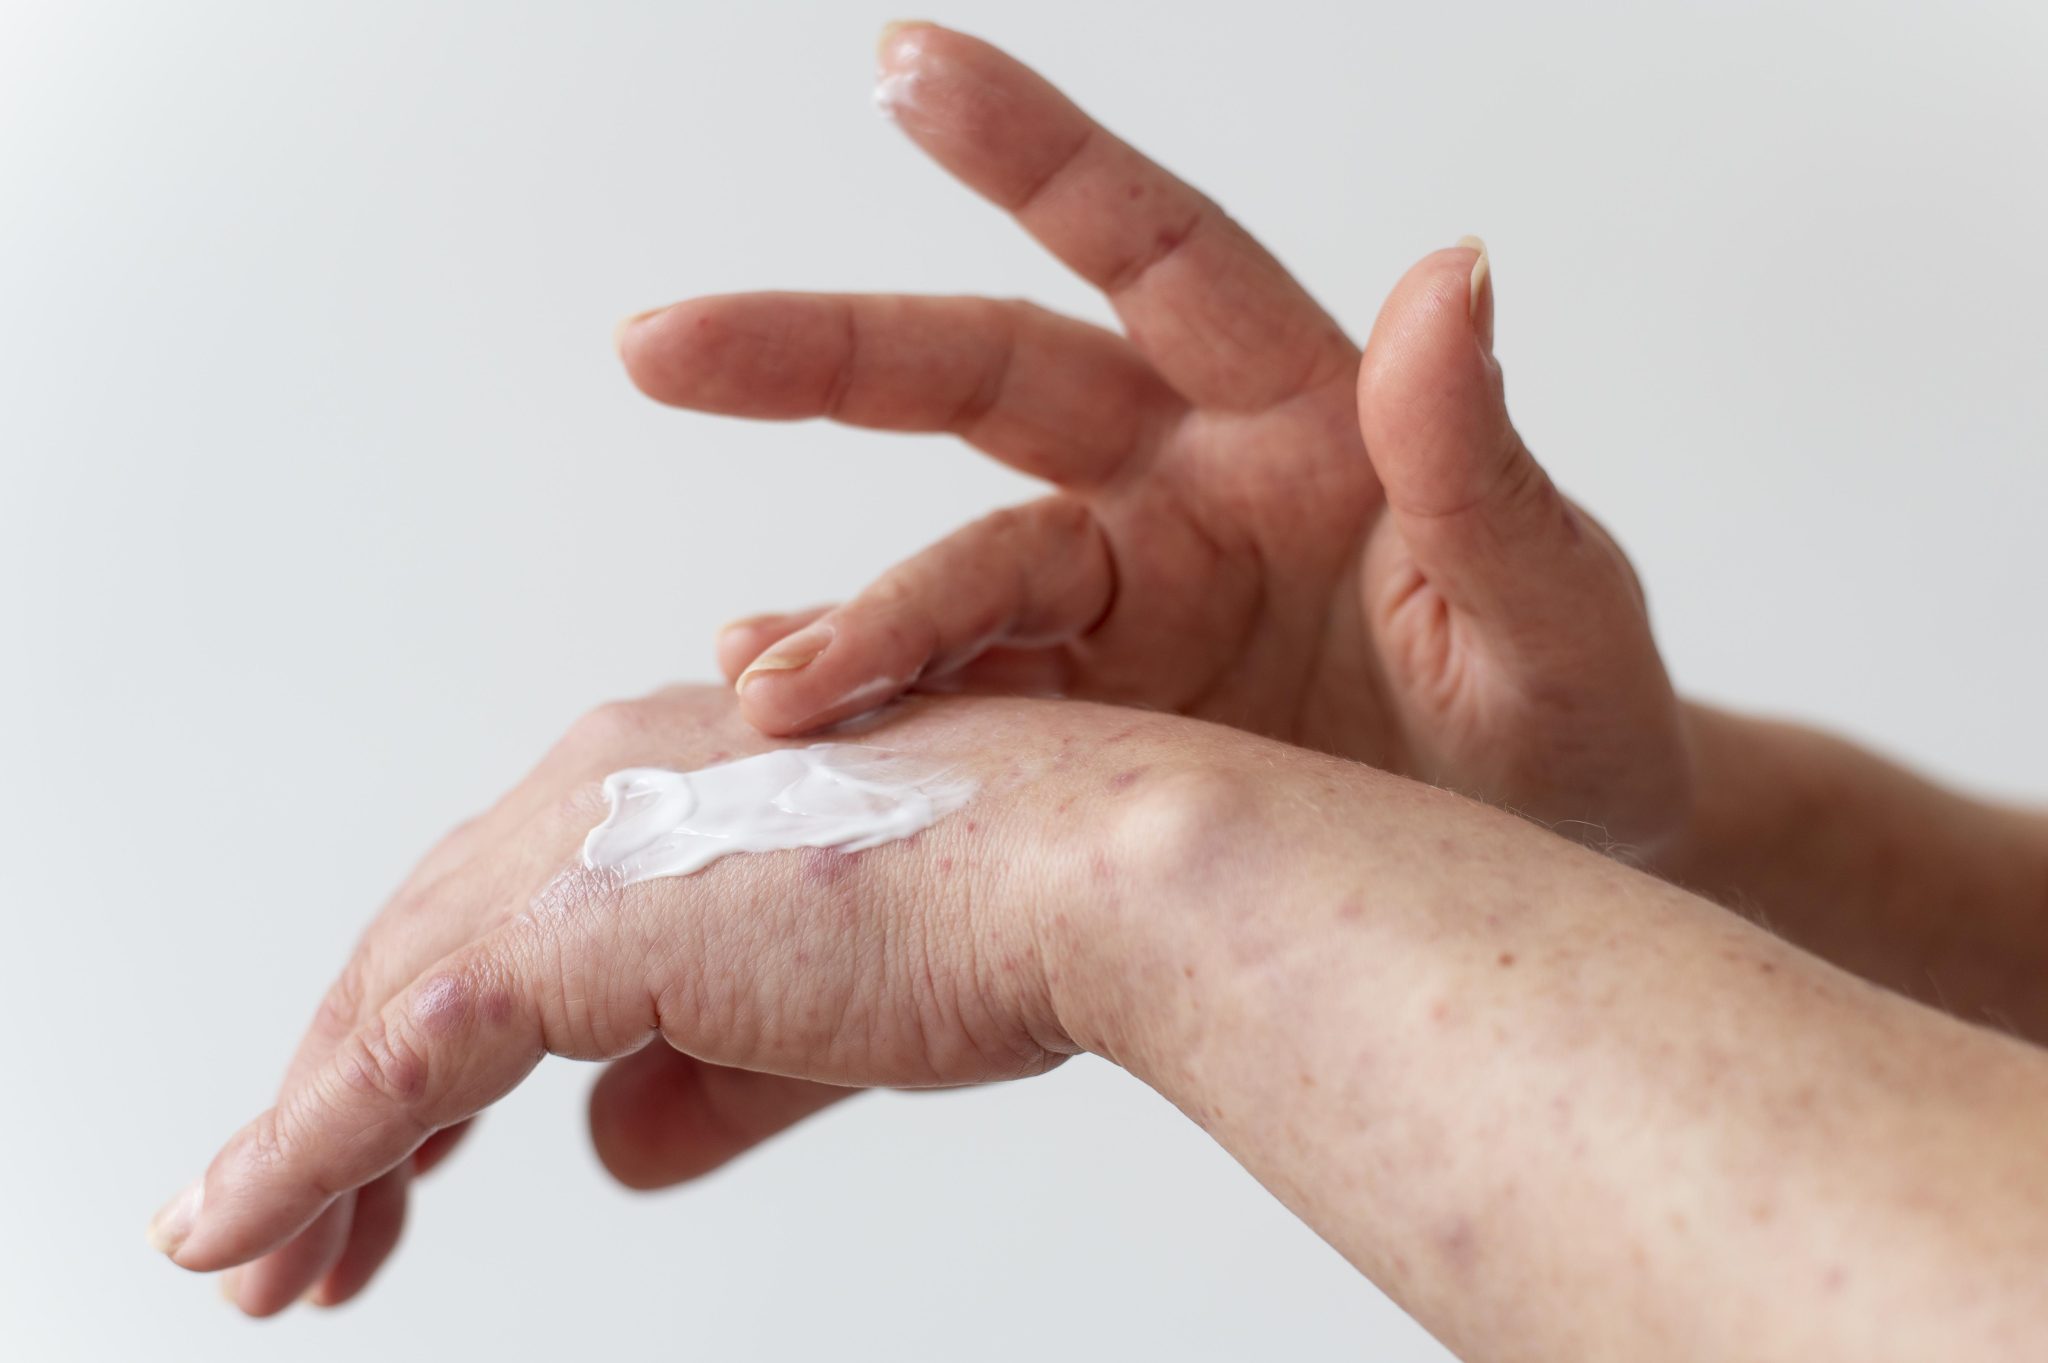 semaglutide and skin sensitivity 3